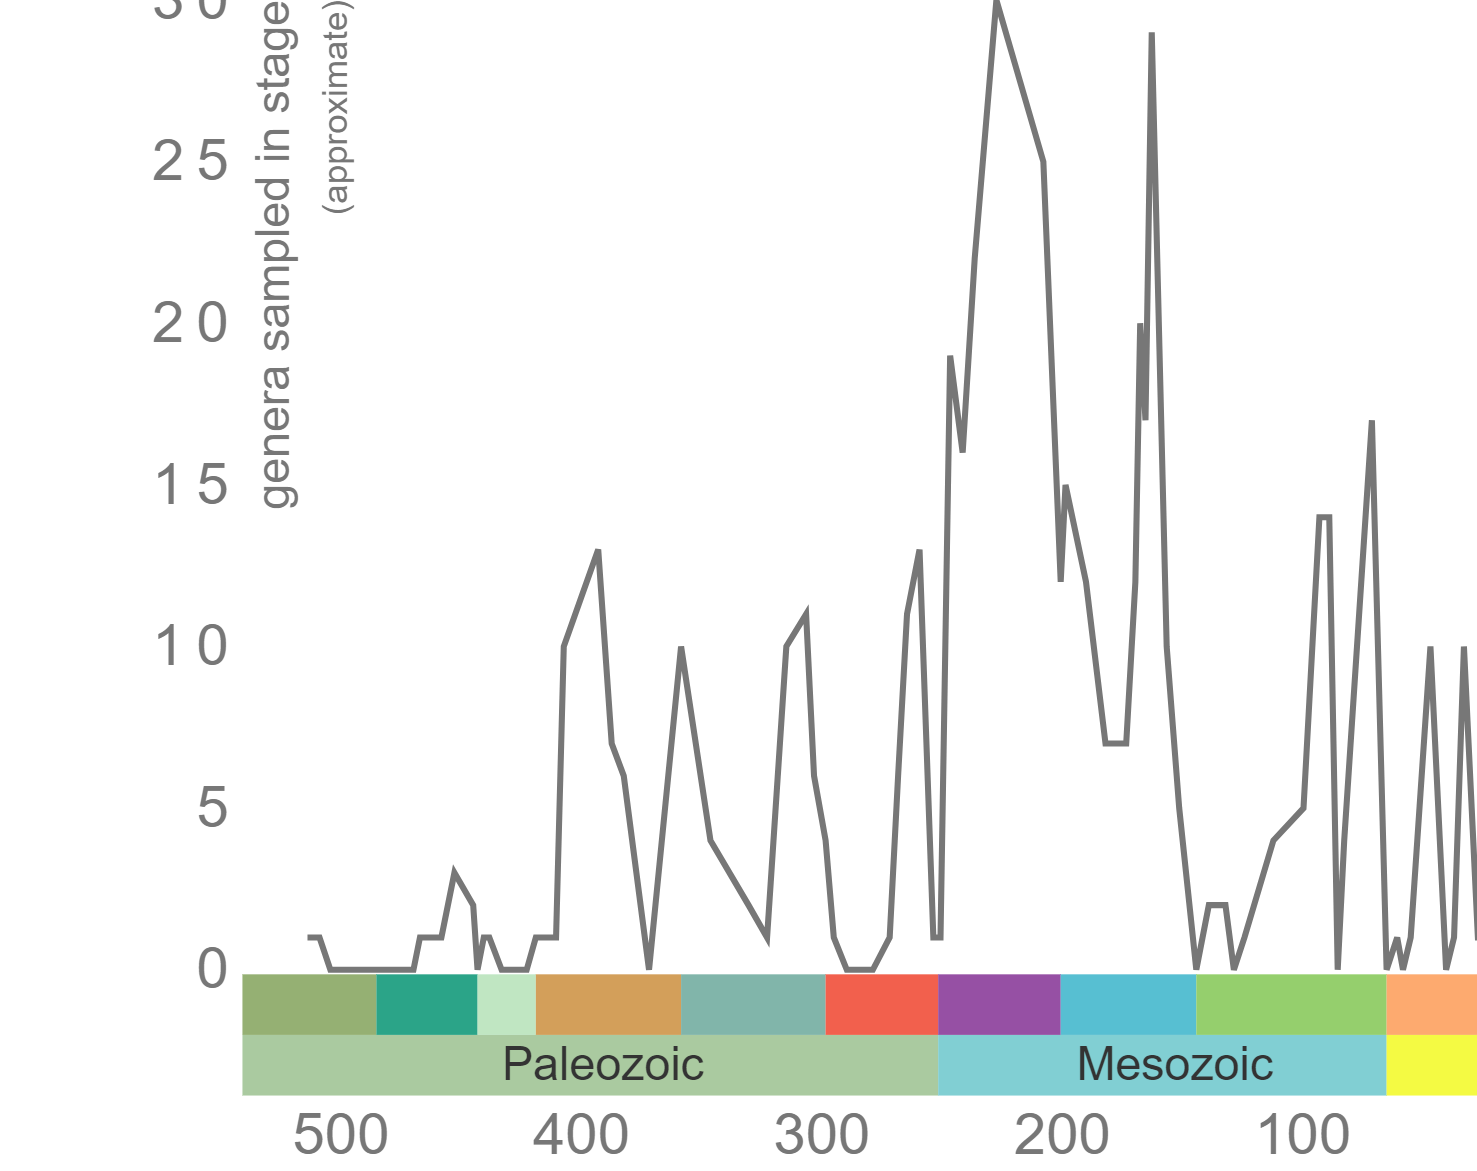 Graph of Class Holothuroidea diversity curve through time